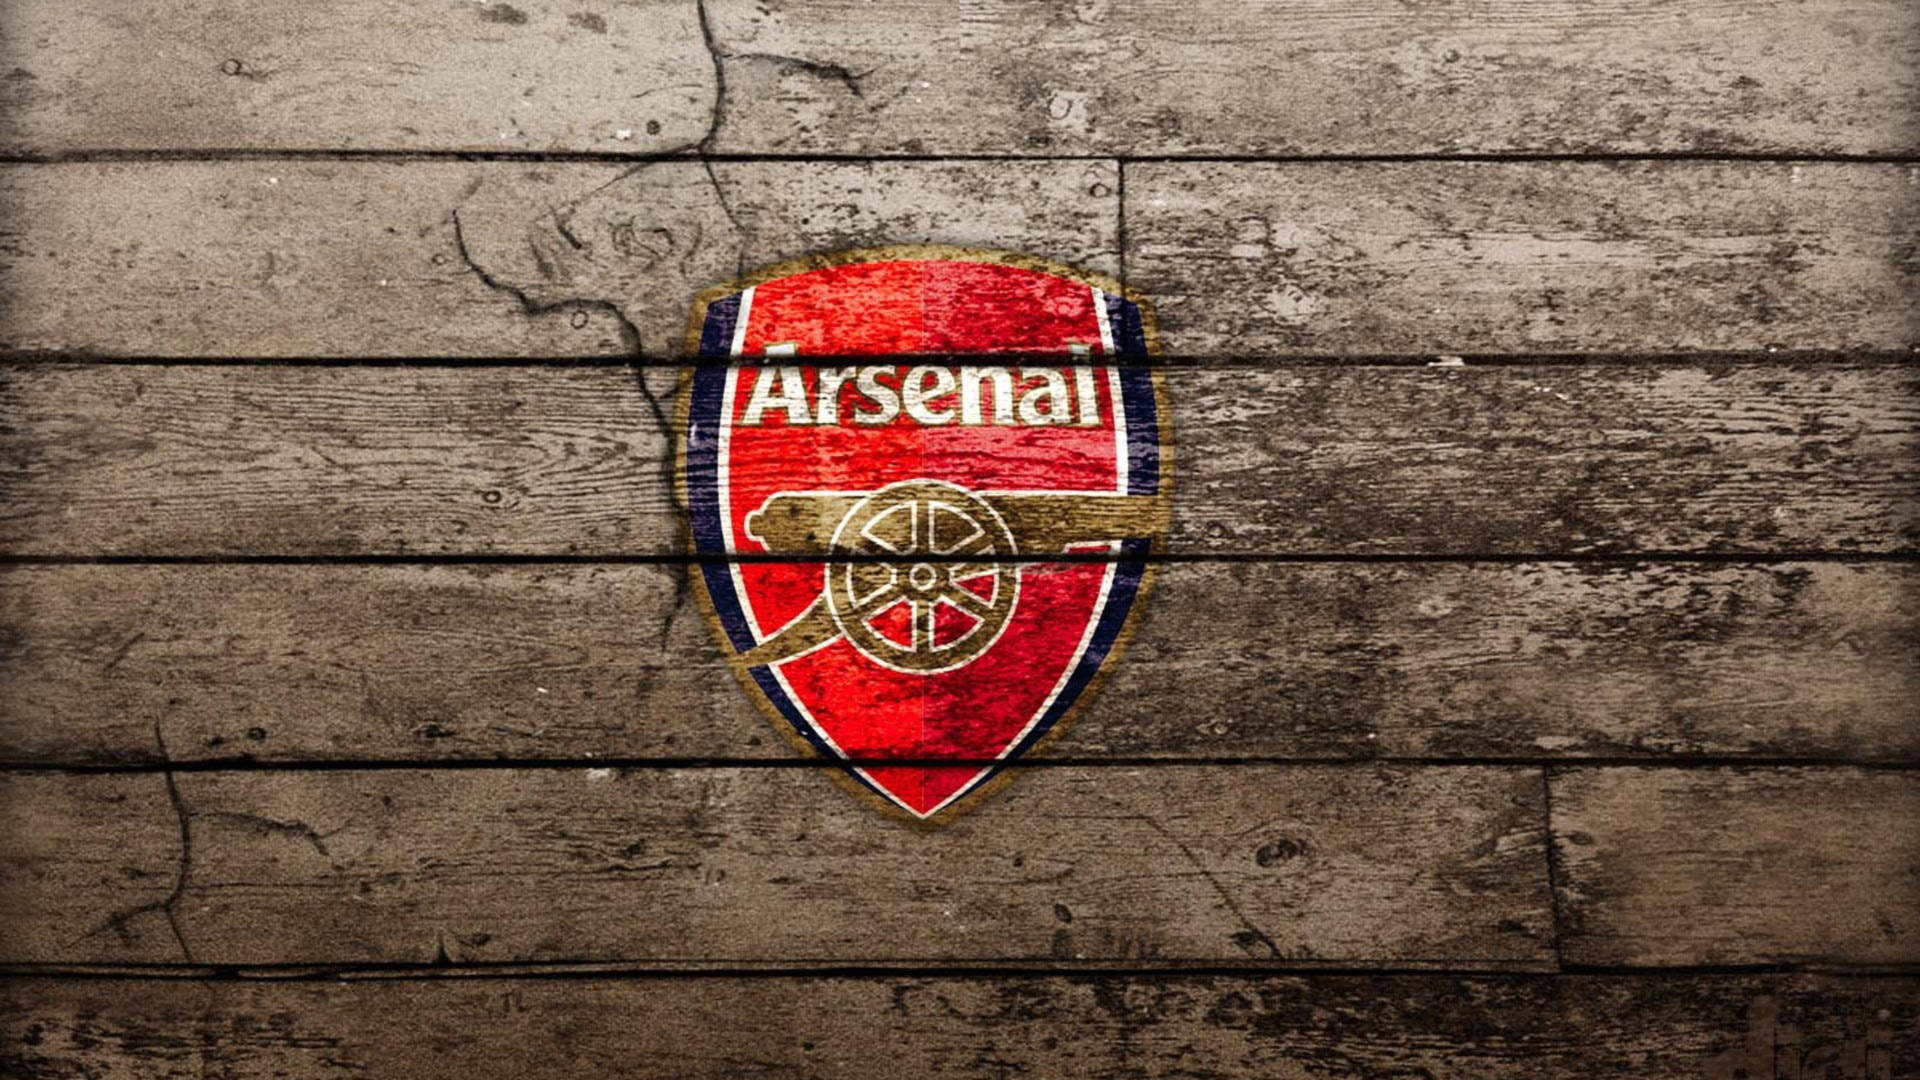 Arsenal Emblem On Wood Floor